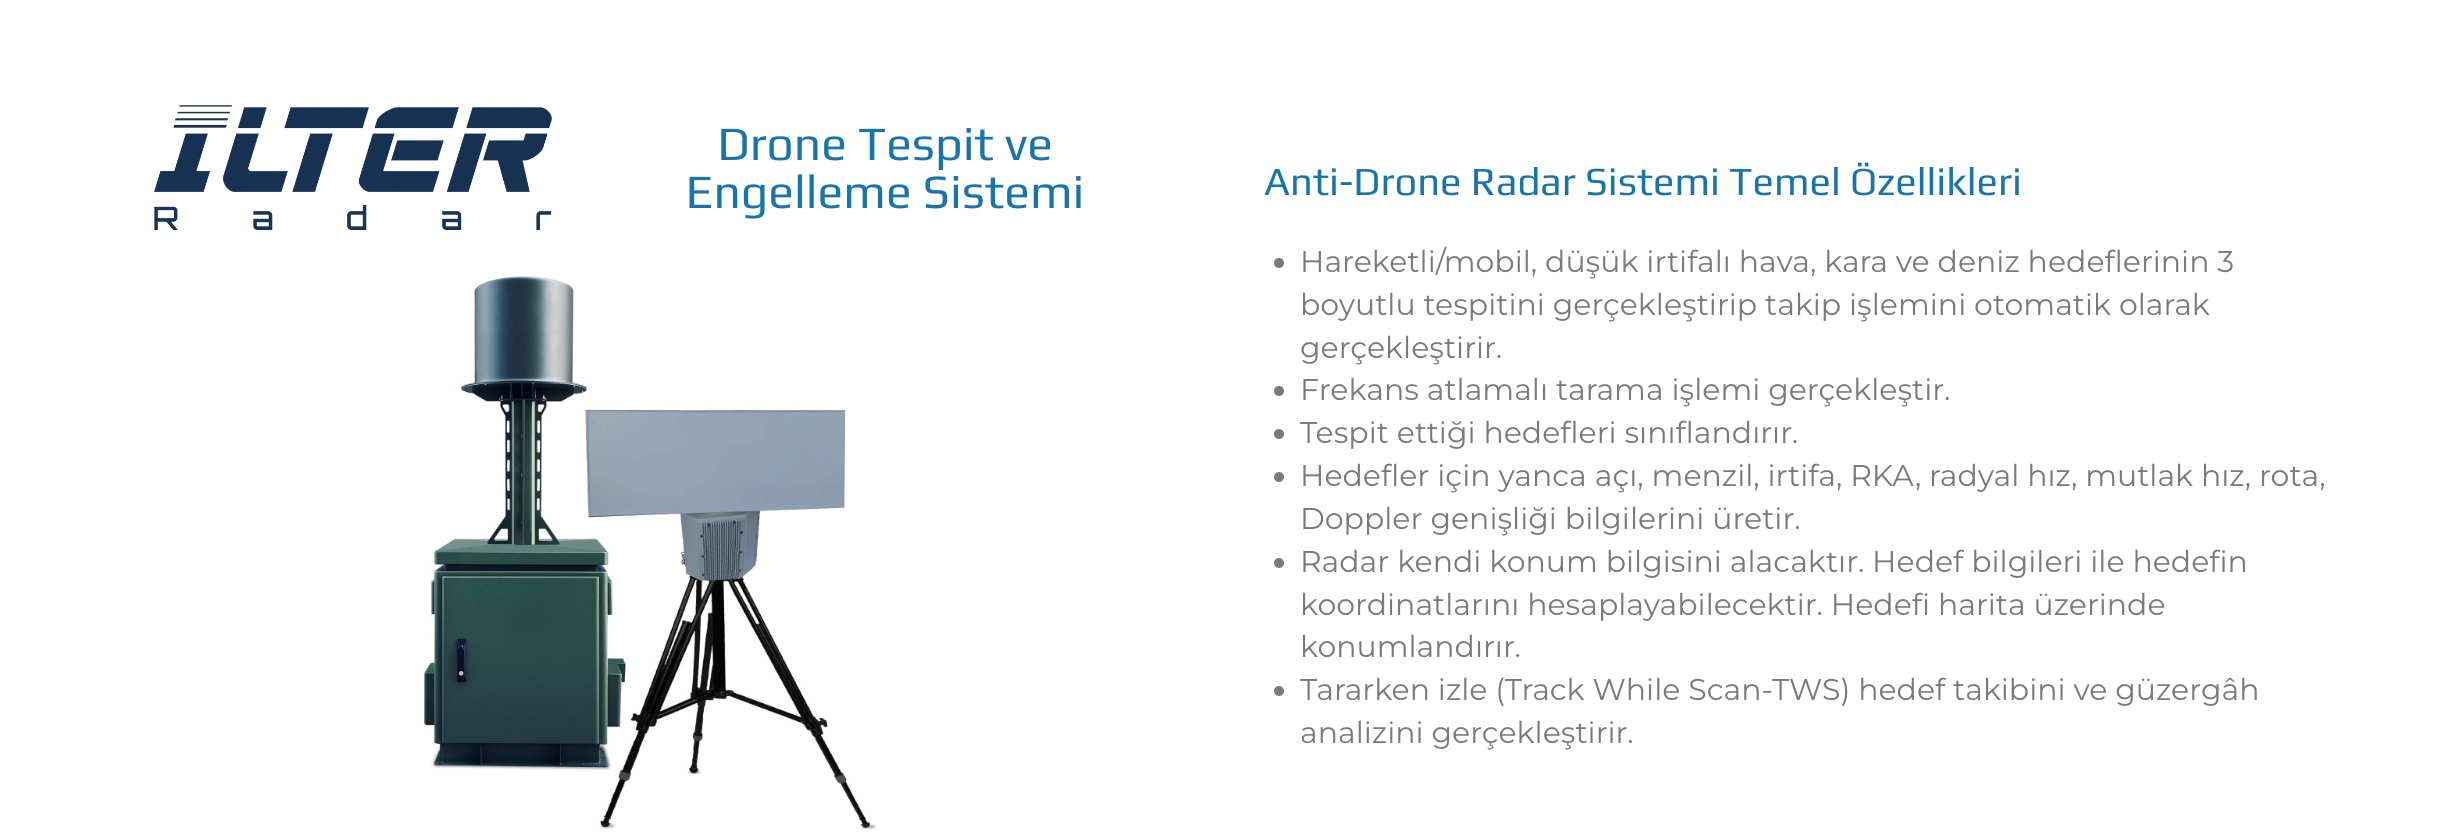 İlter Drone Tespit ve Engelleme Sistemi